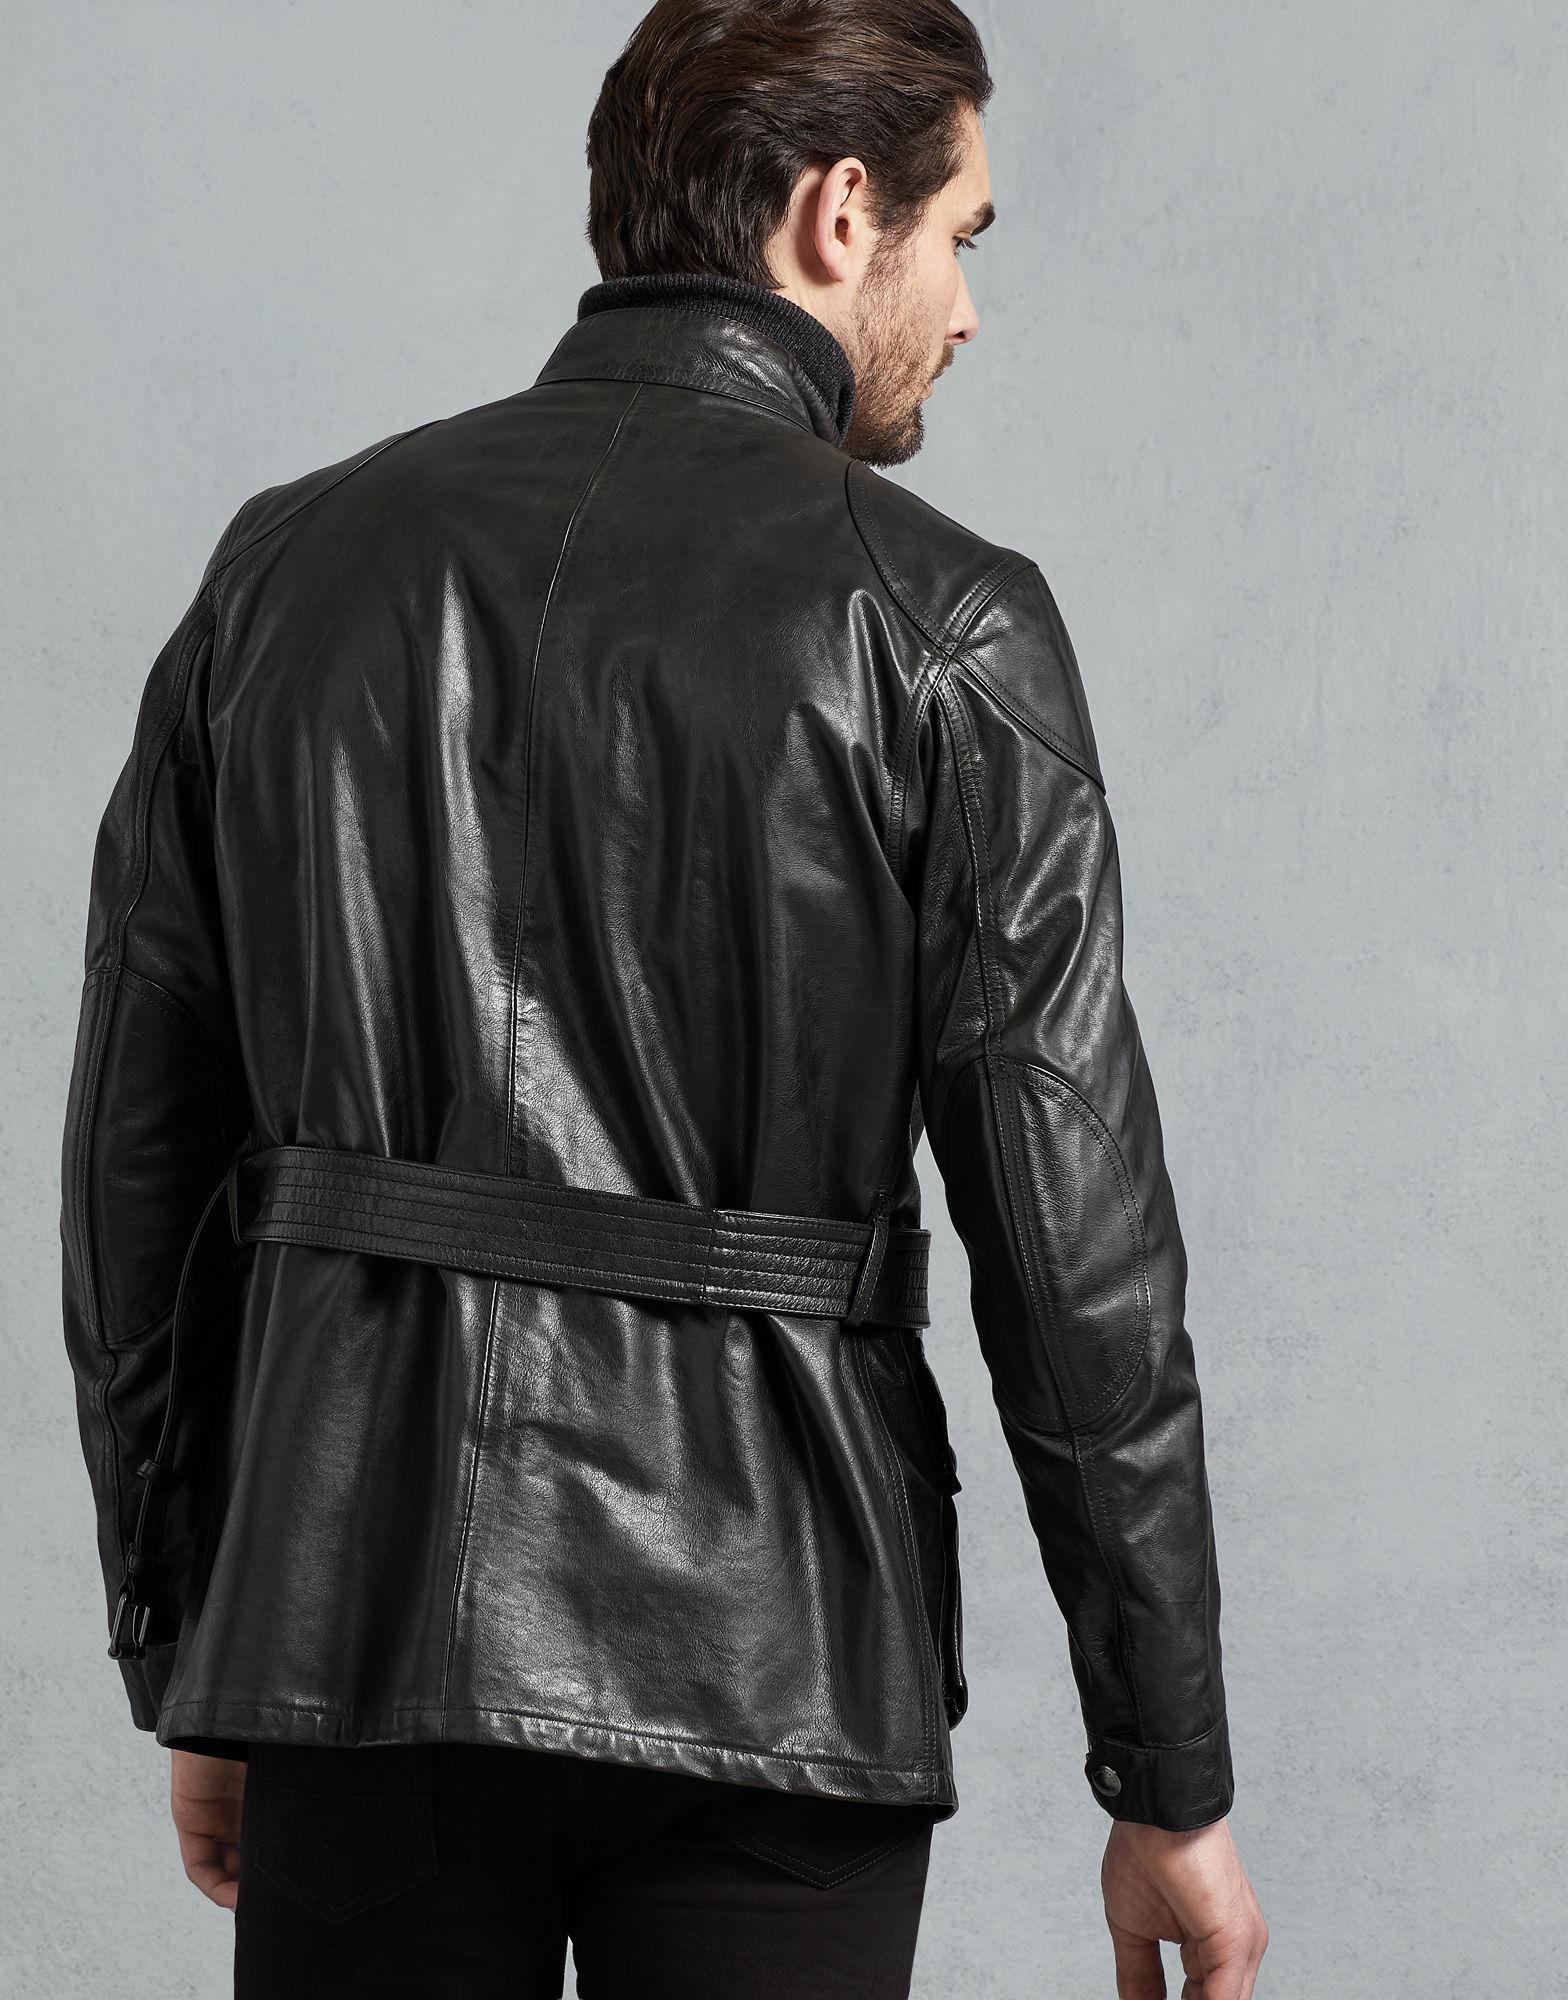 Belstaff Leather Trialmaster Panther Jacket in Black for Men - Lyst